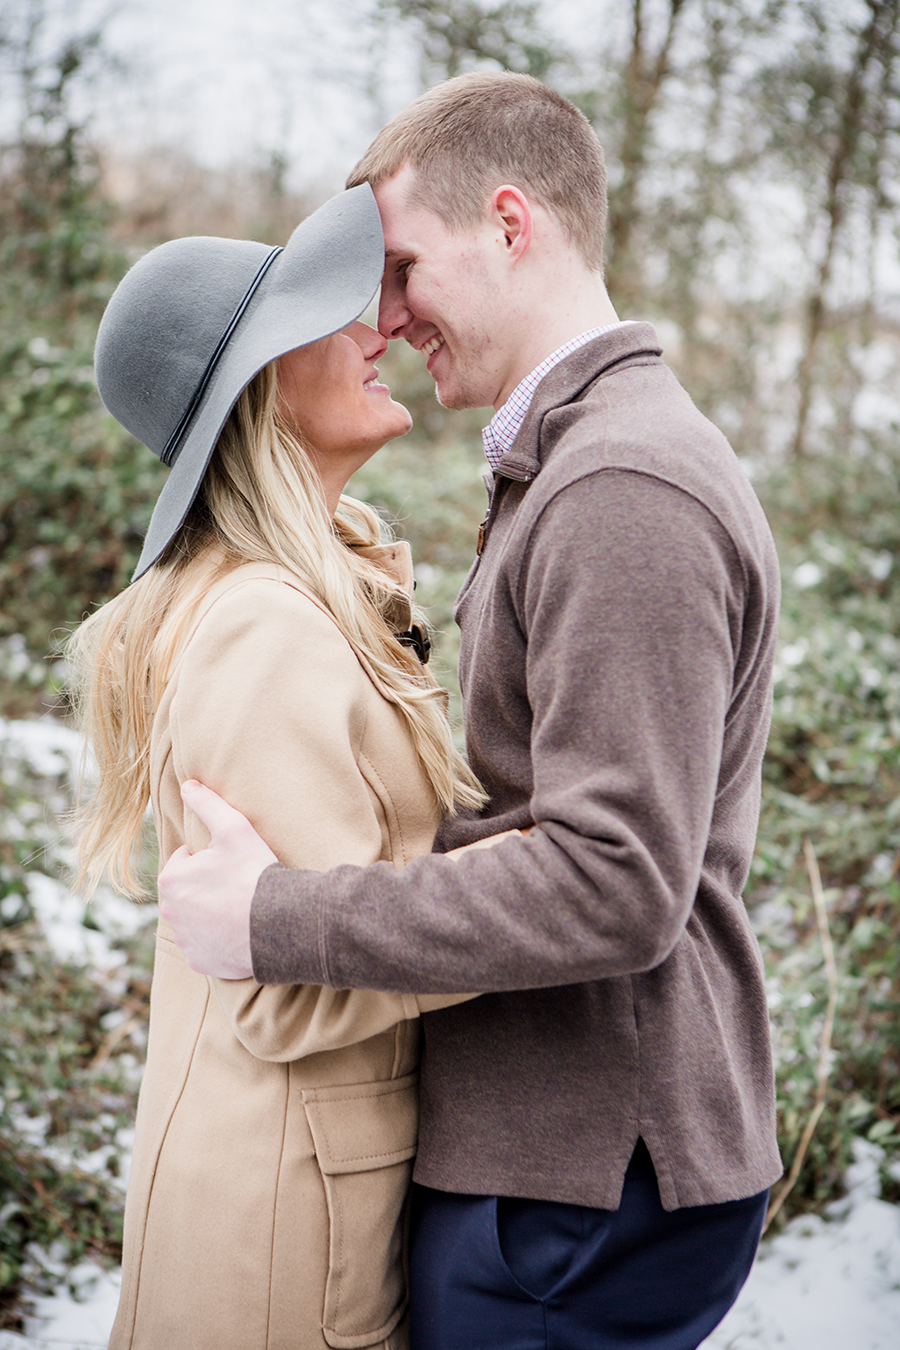 Floppy hat kiss engagement photo by Knoxville Wedding Photographer, Amanda May Photos.